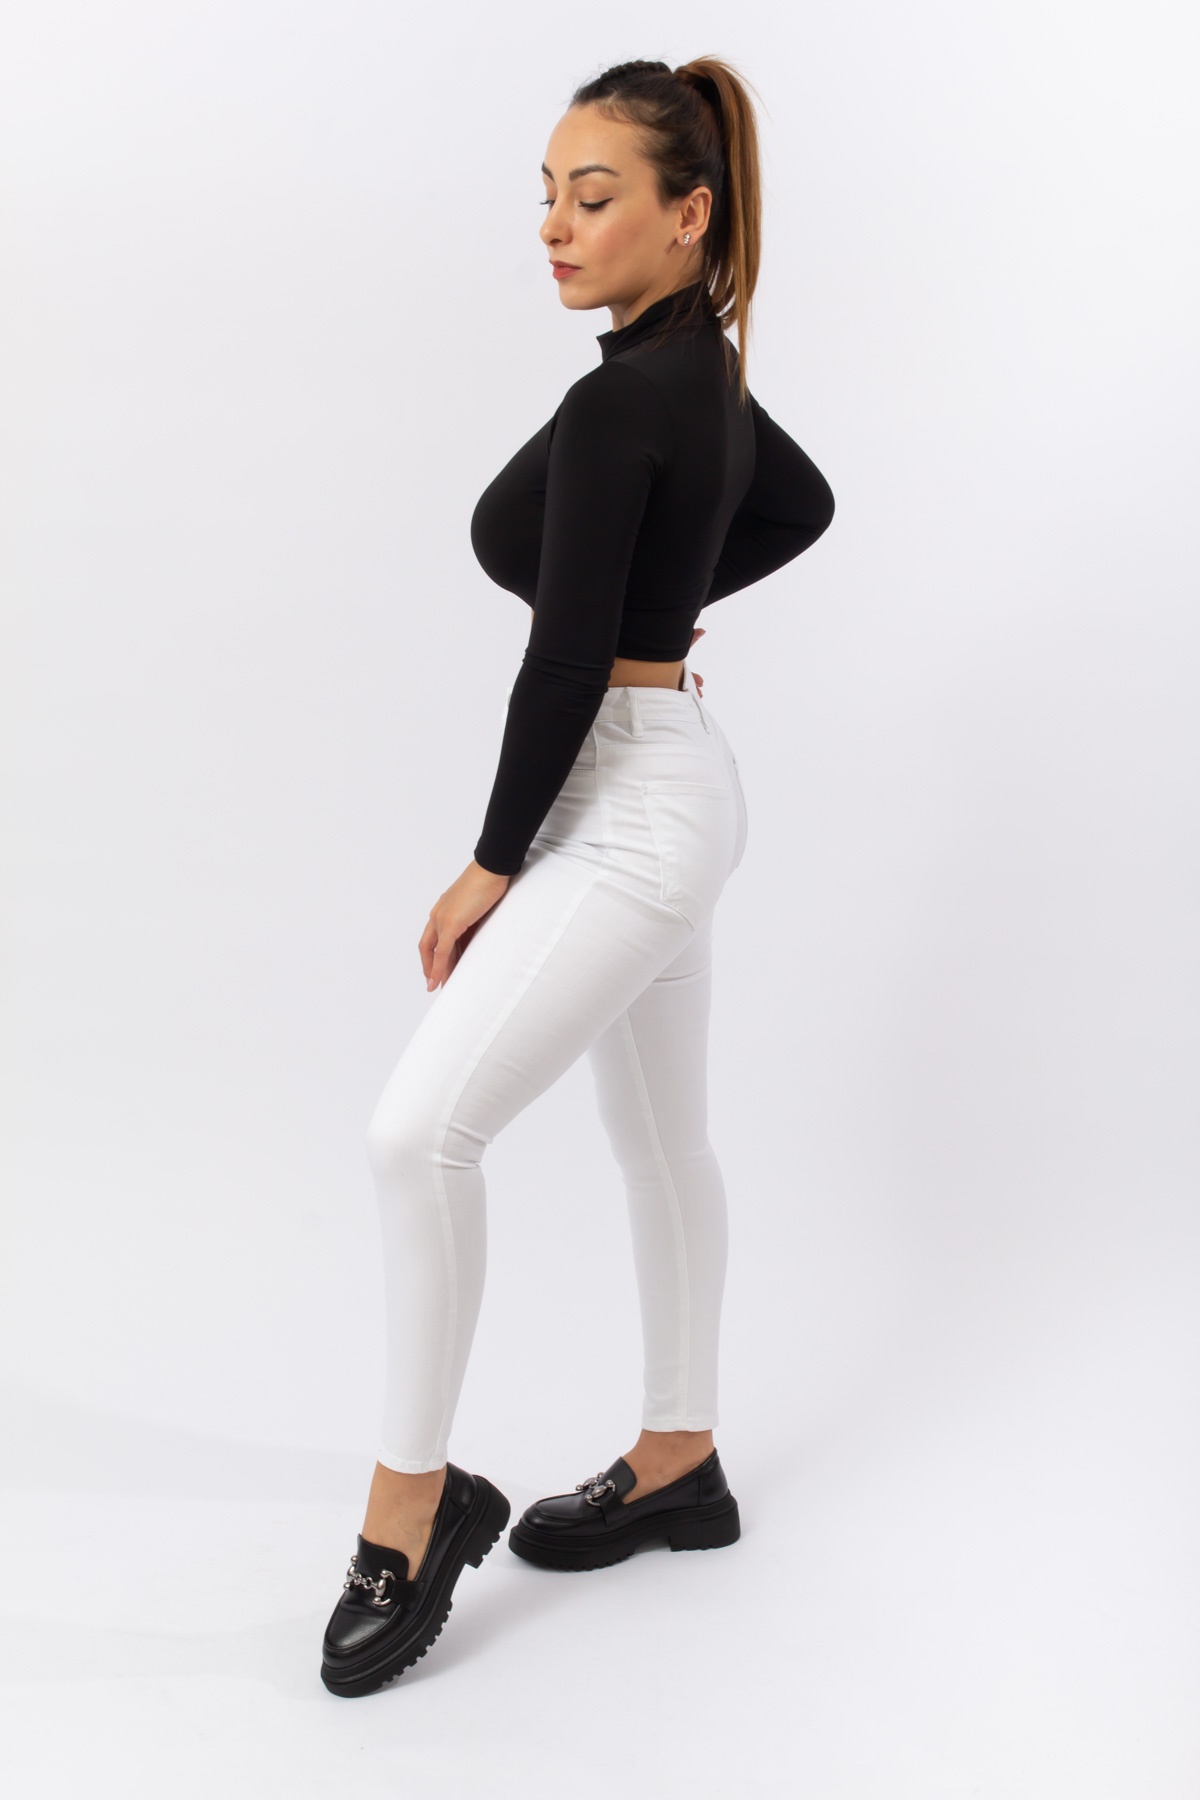 Beyaz Renk XS-XL Beden Süper Skinny Yüksel Bel Tayt Pantolon